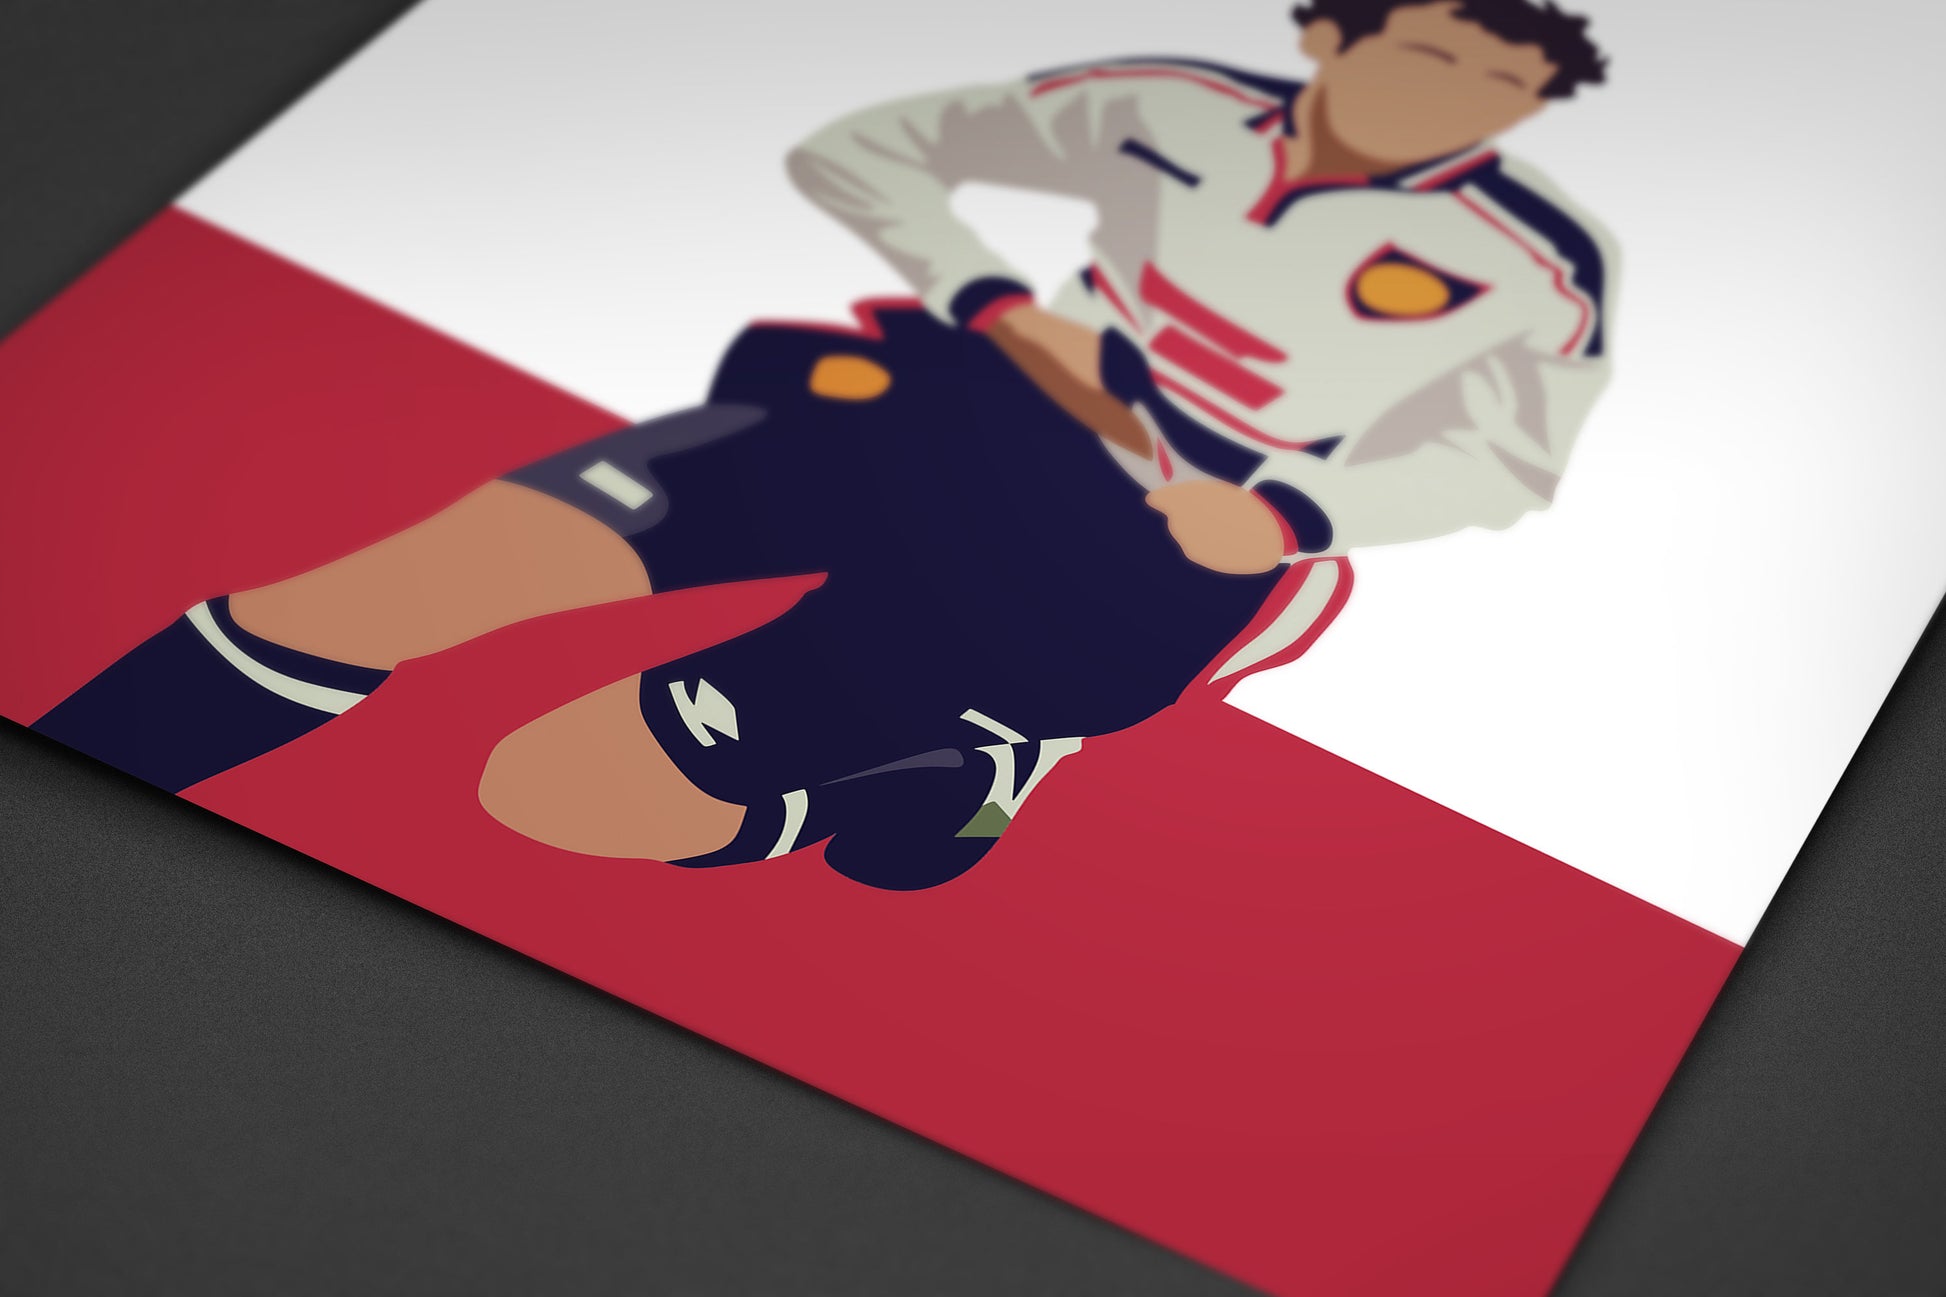 Giggsy FA CUP Artwork | Minimalist Art Print Poster Gift Idea For Him | Football Print | Soccer| Gift for Husband Boyfriend